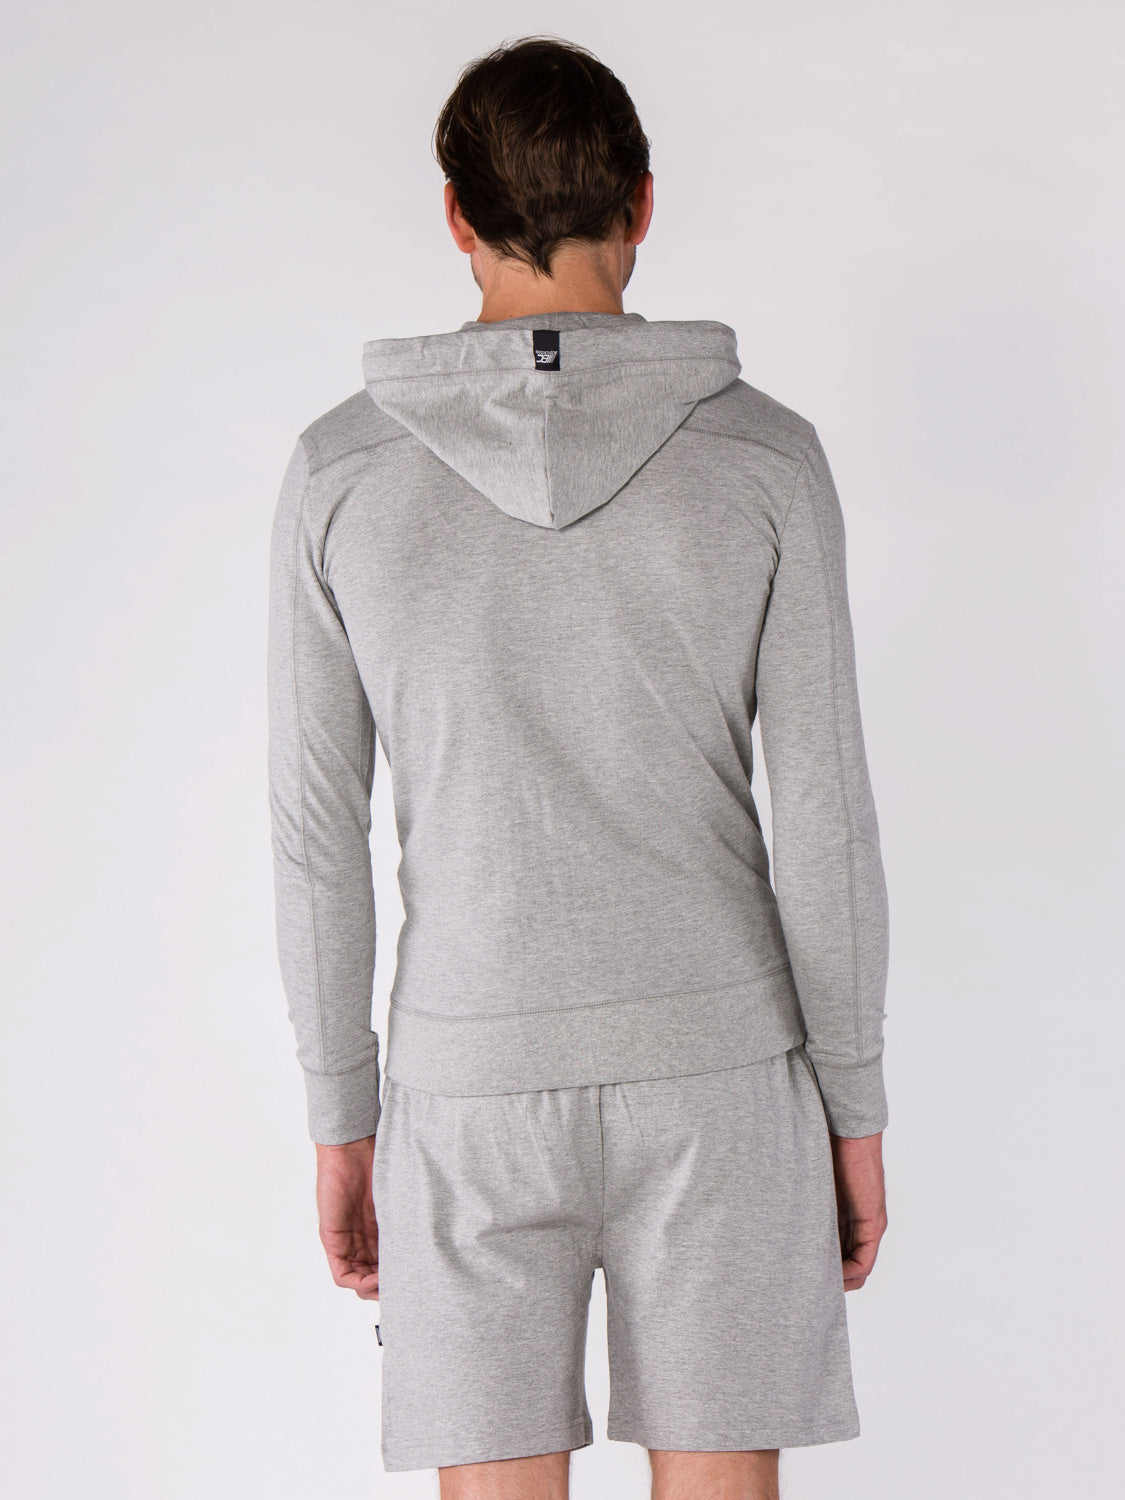 Men's Training hooded sweatshirt BodyCross - Bambou Grey